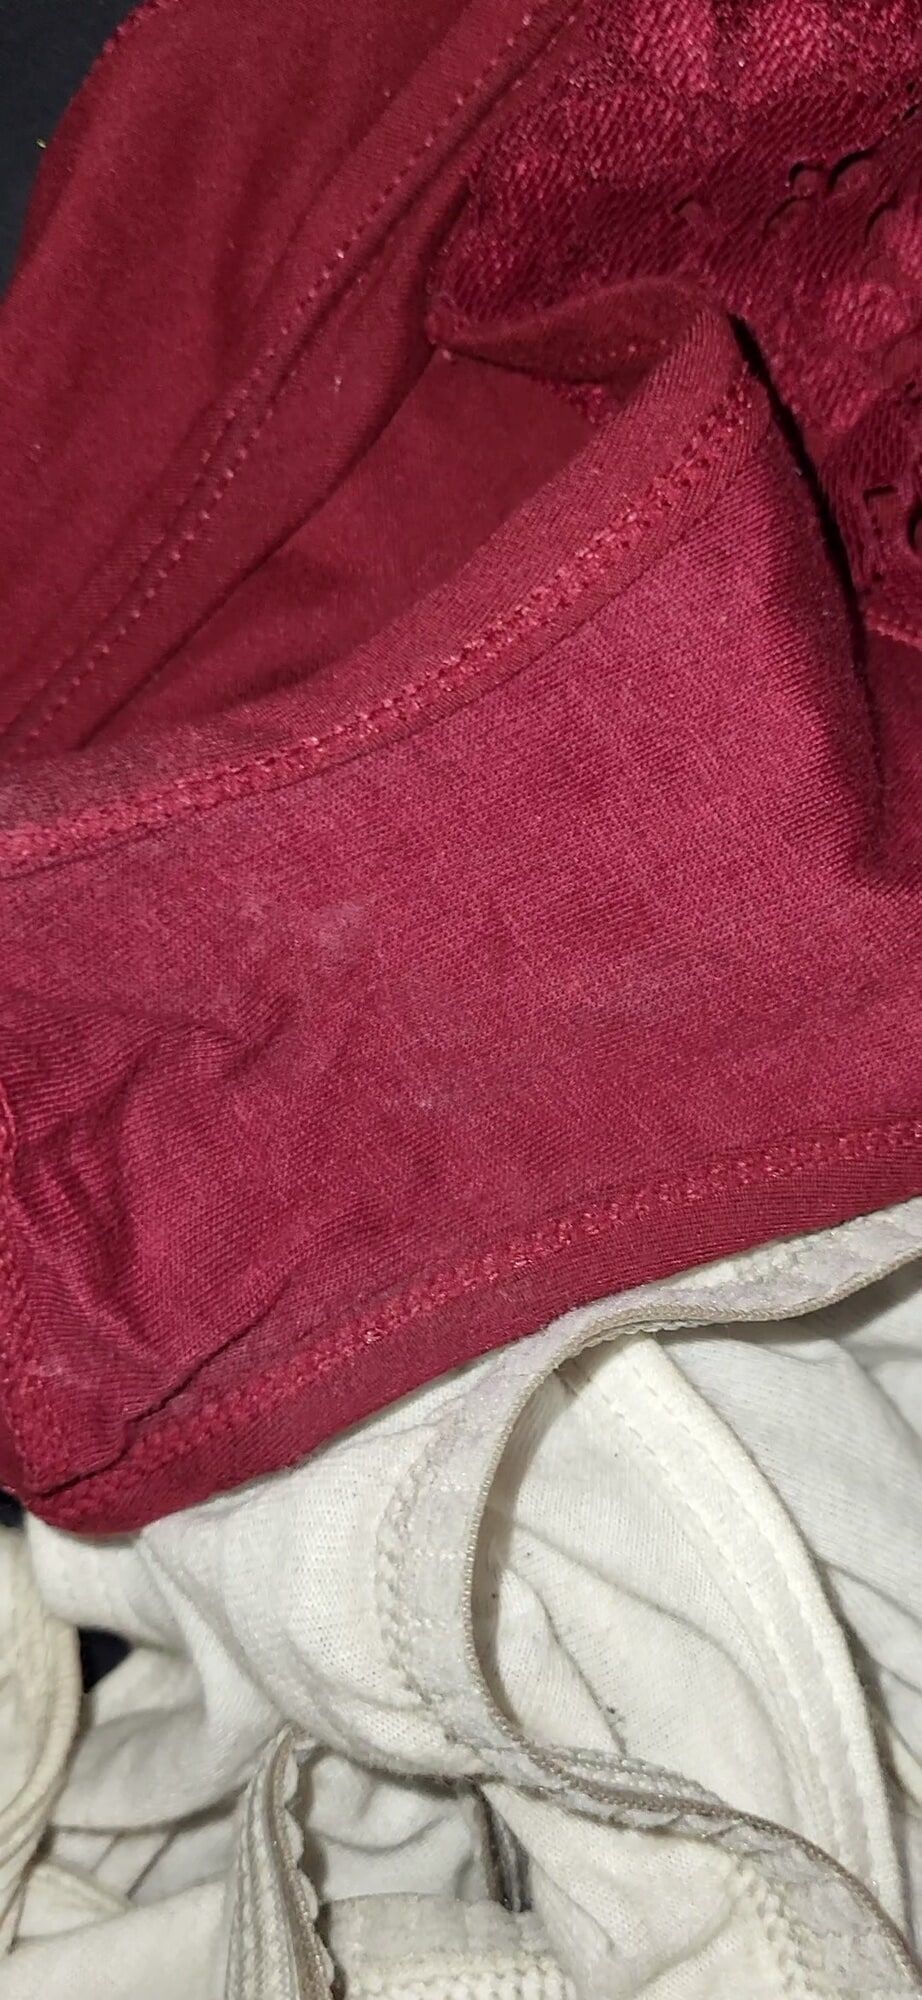 Wife's Dirty Panties Laundry Bag #15